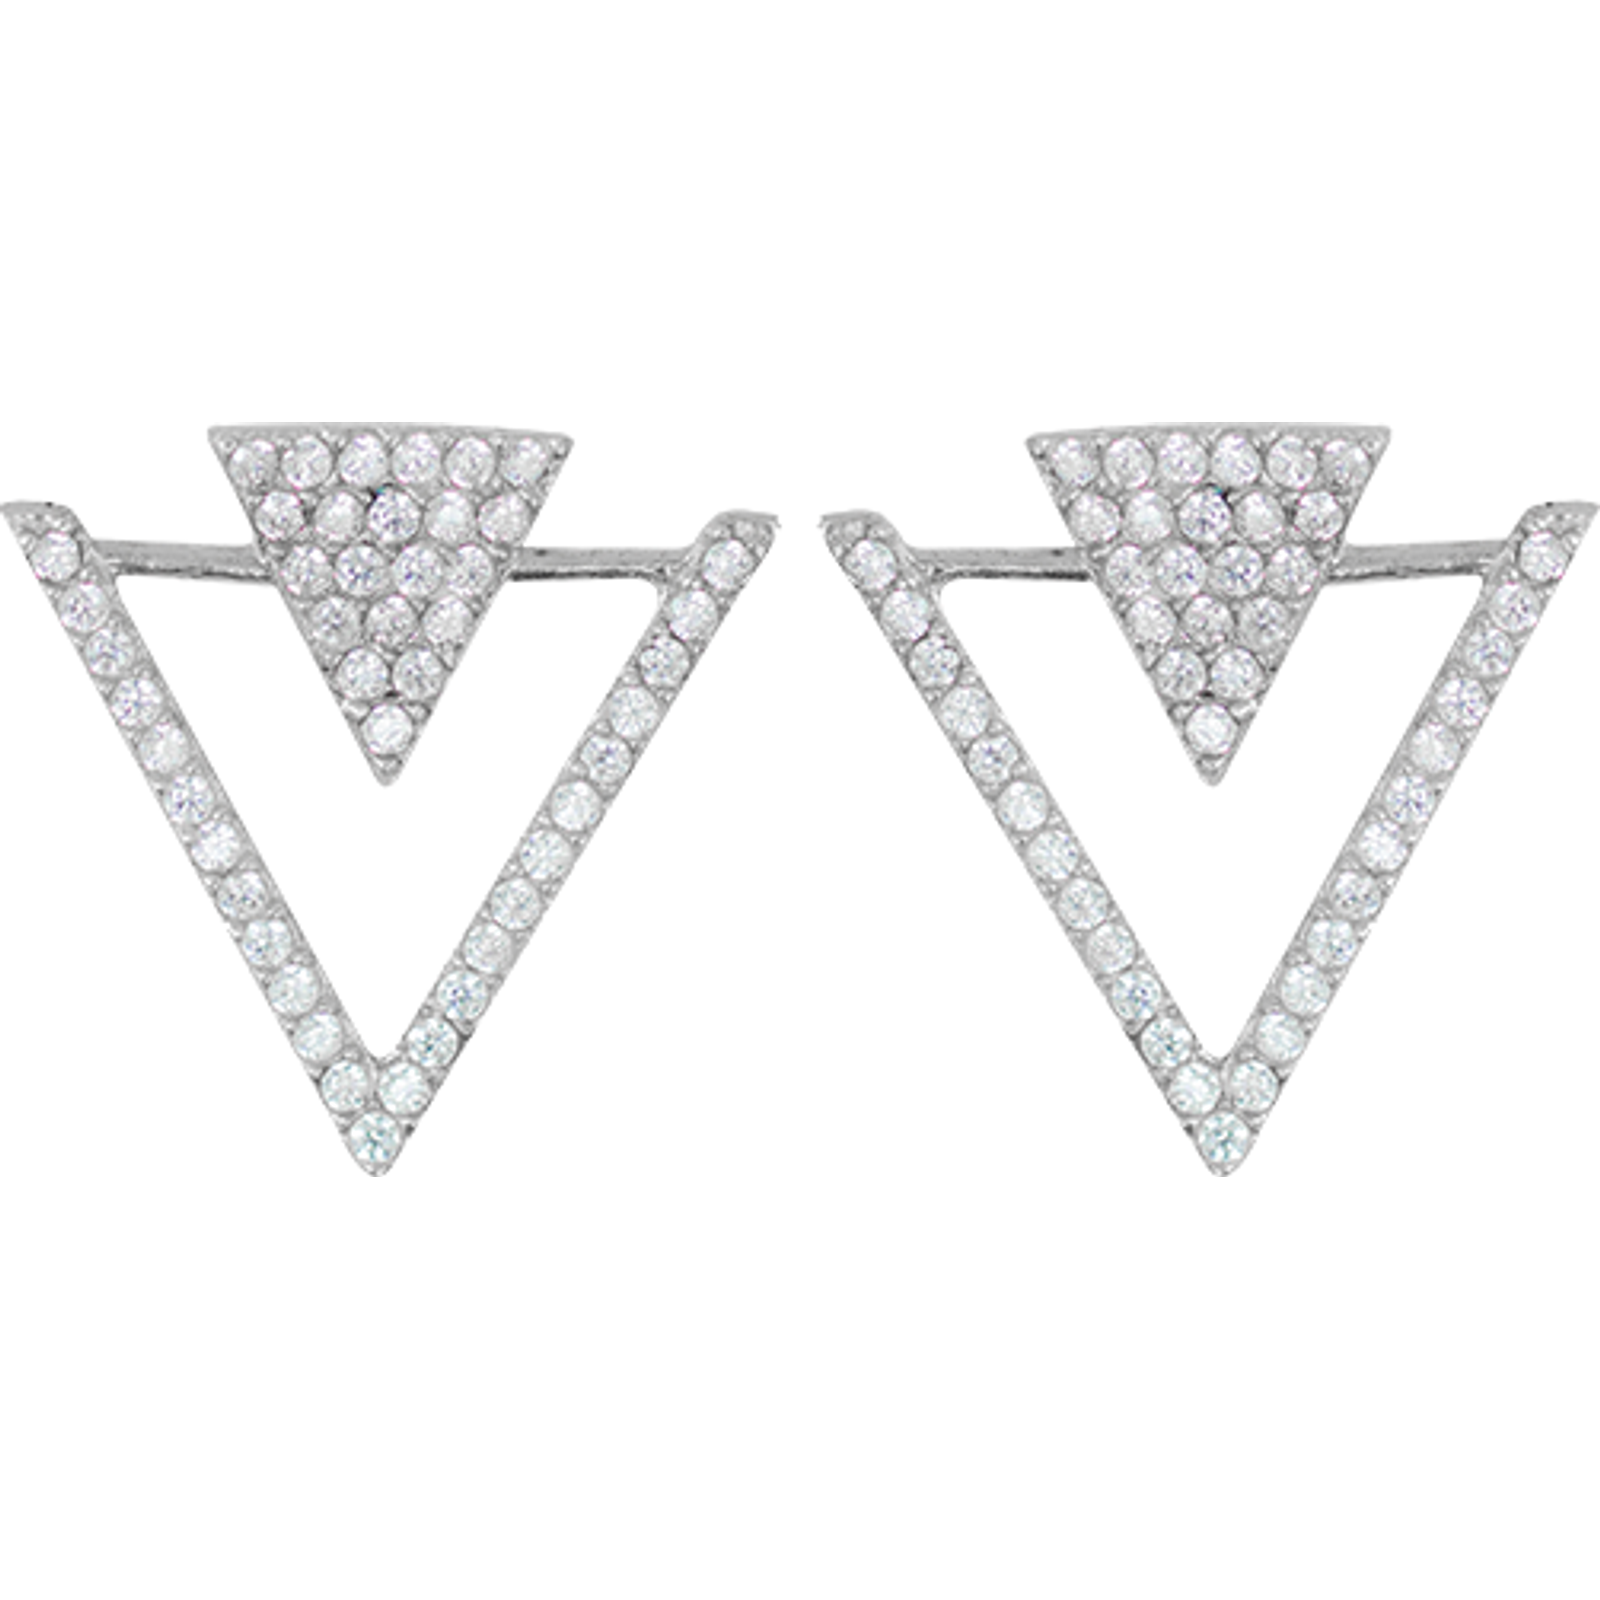 Earrings Triángulos Plata Zirconia Blanca